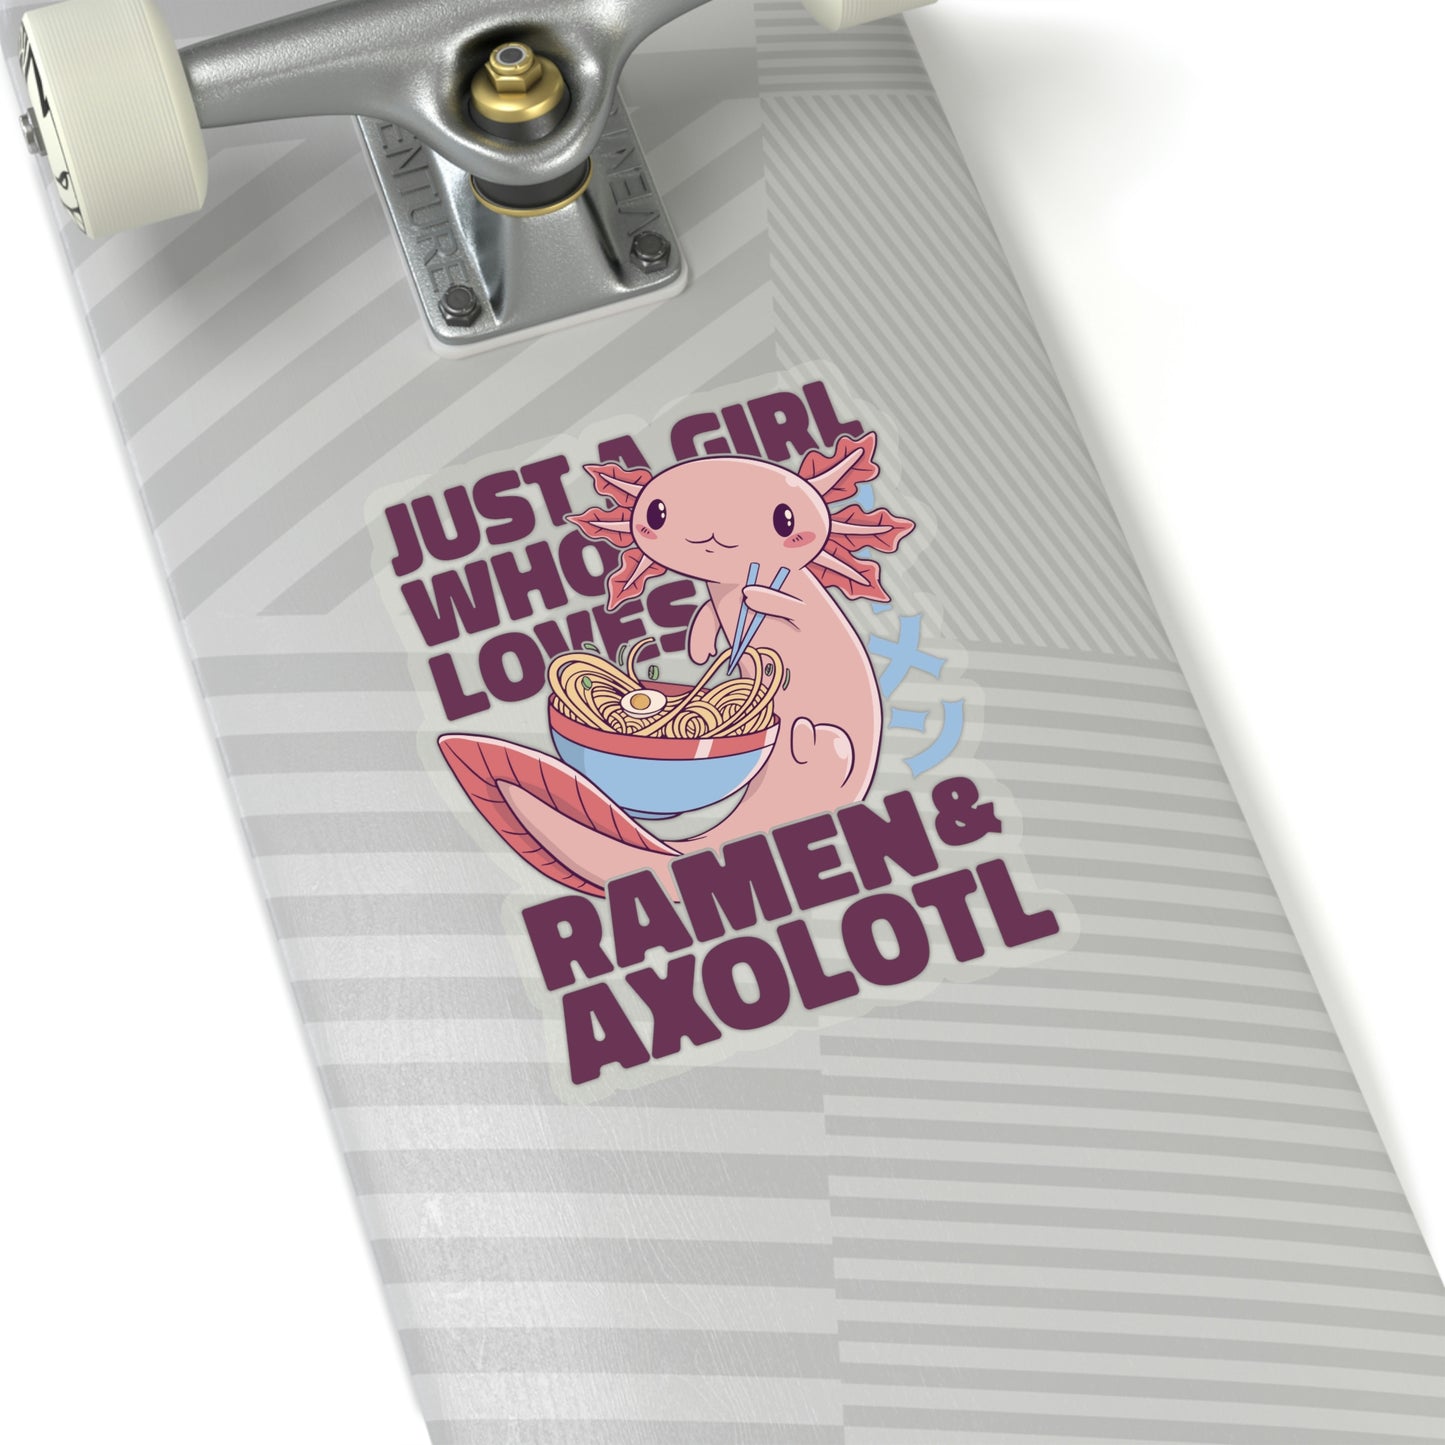 Kawaii Aesthetic Just A Girl Who Loves Ramen & Axolotl Sticker